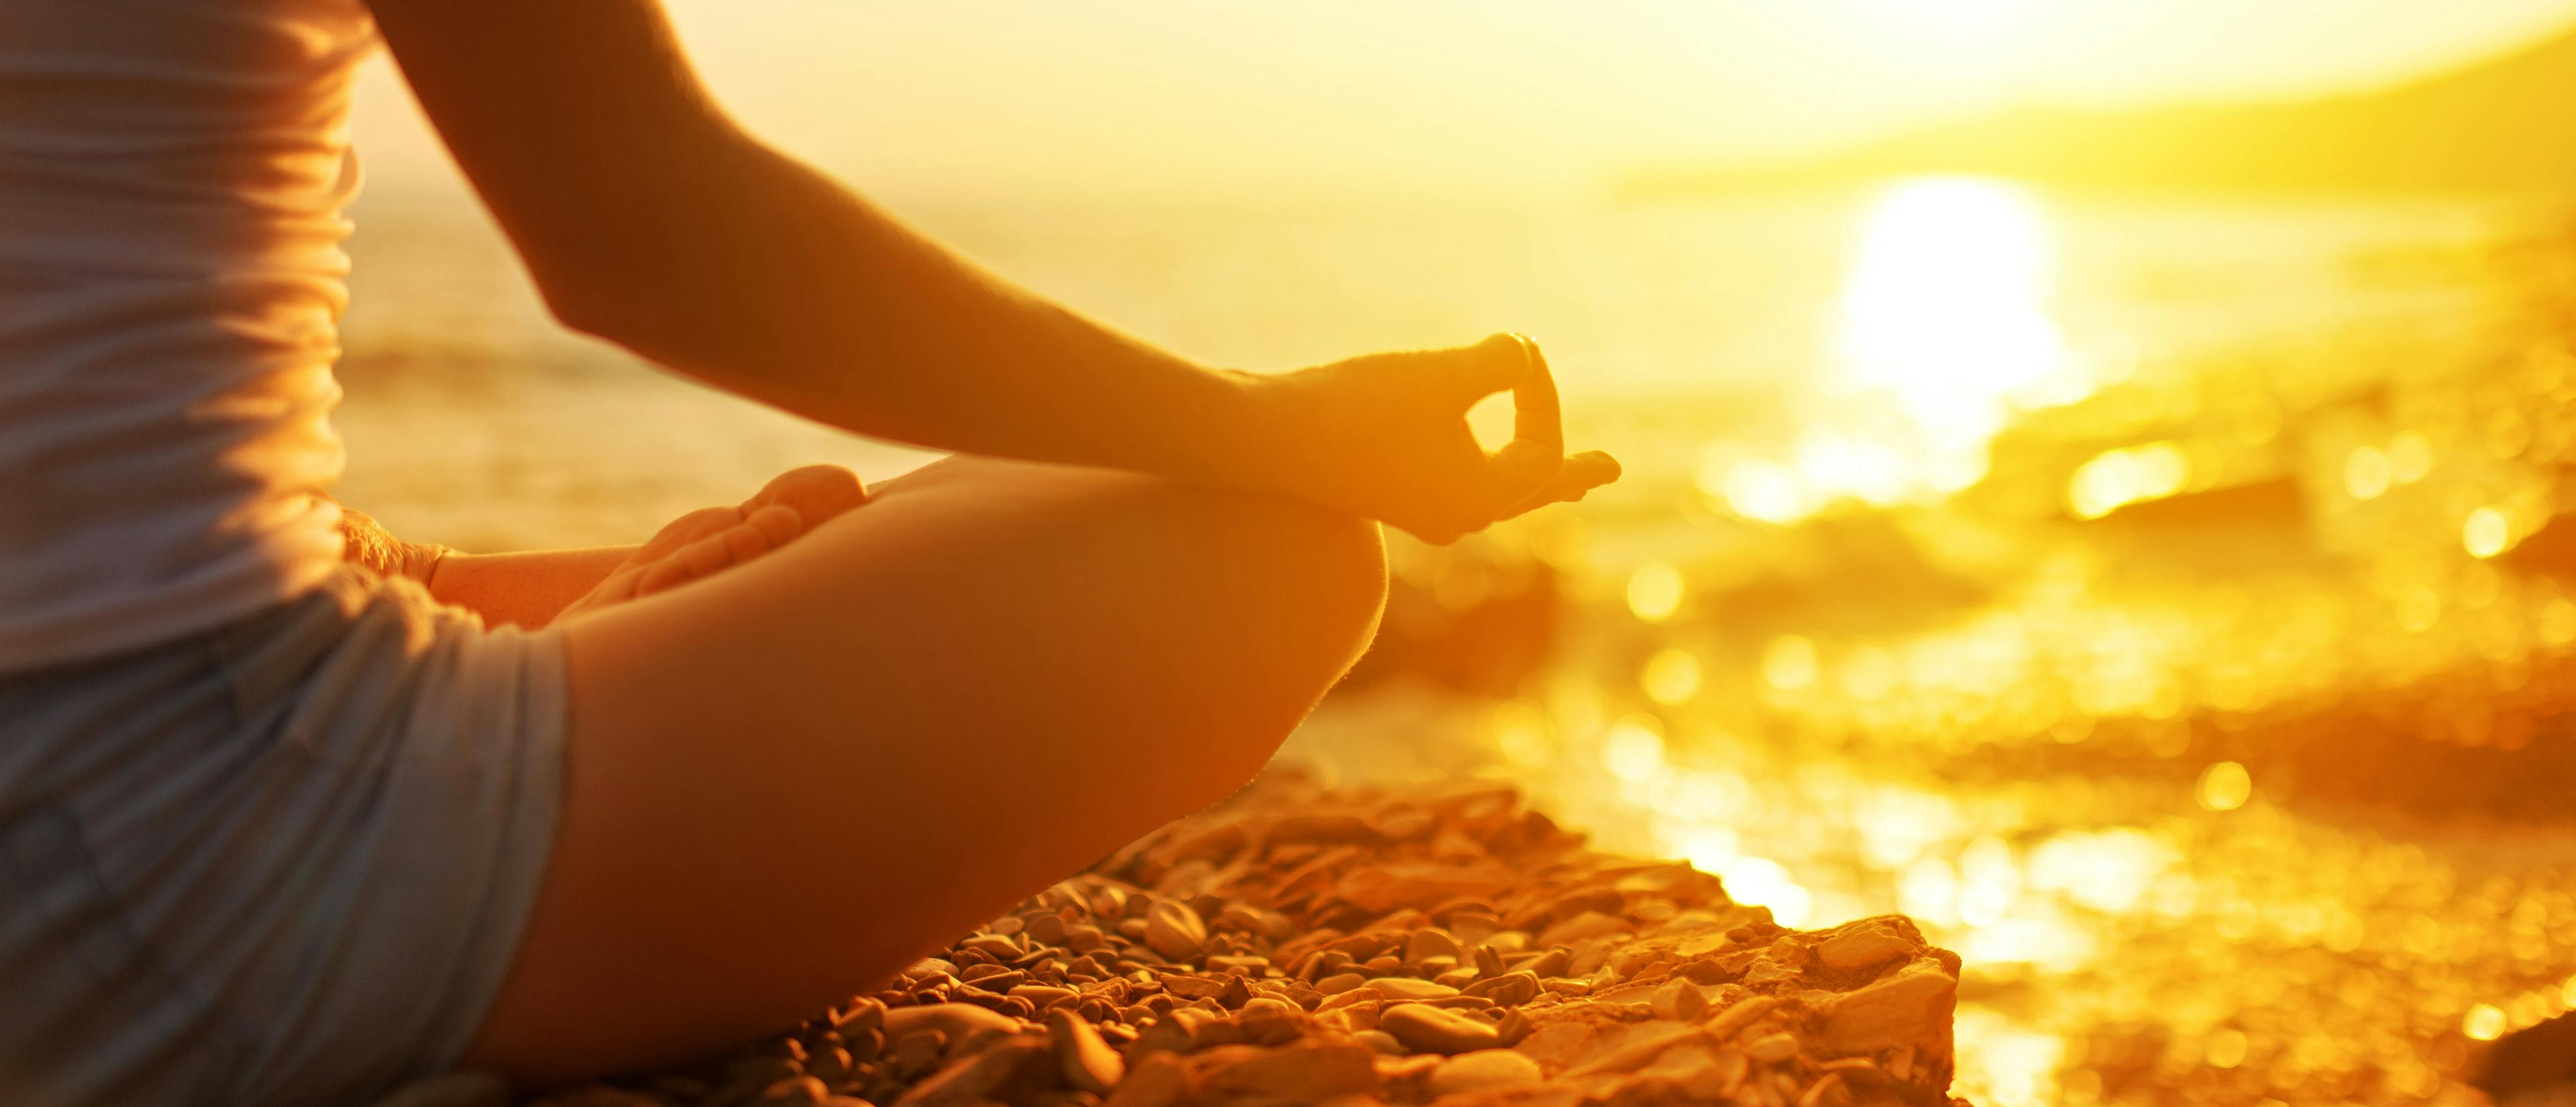 Hatha Yoga Can Benefit Bipolar Disorder Patients